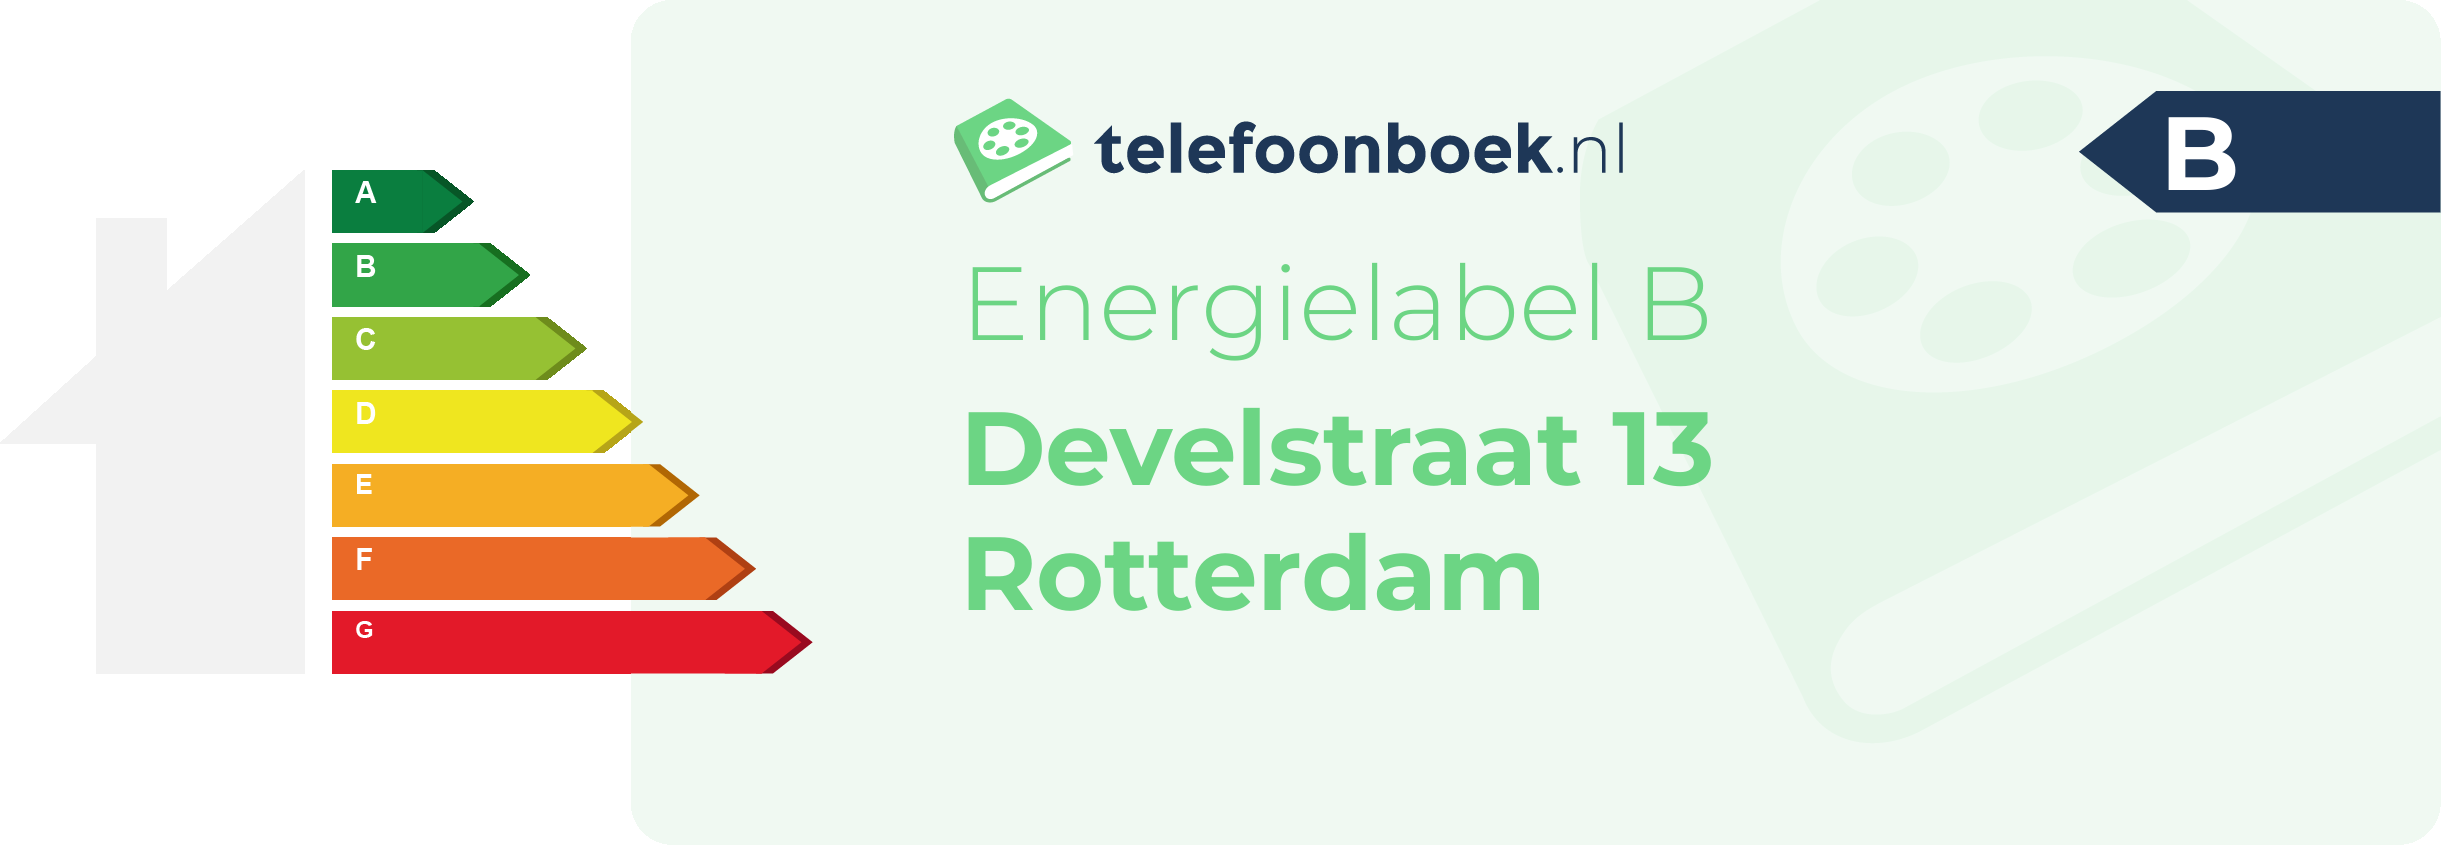 Energielabel Develstraat 13 Rotterdam